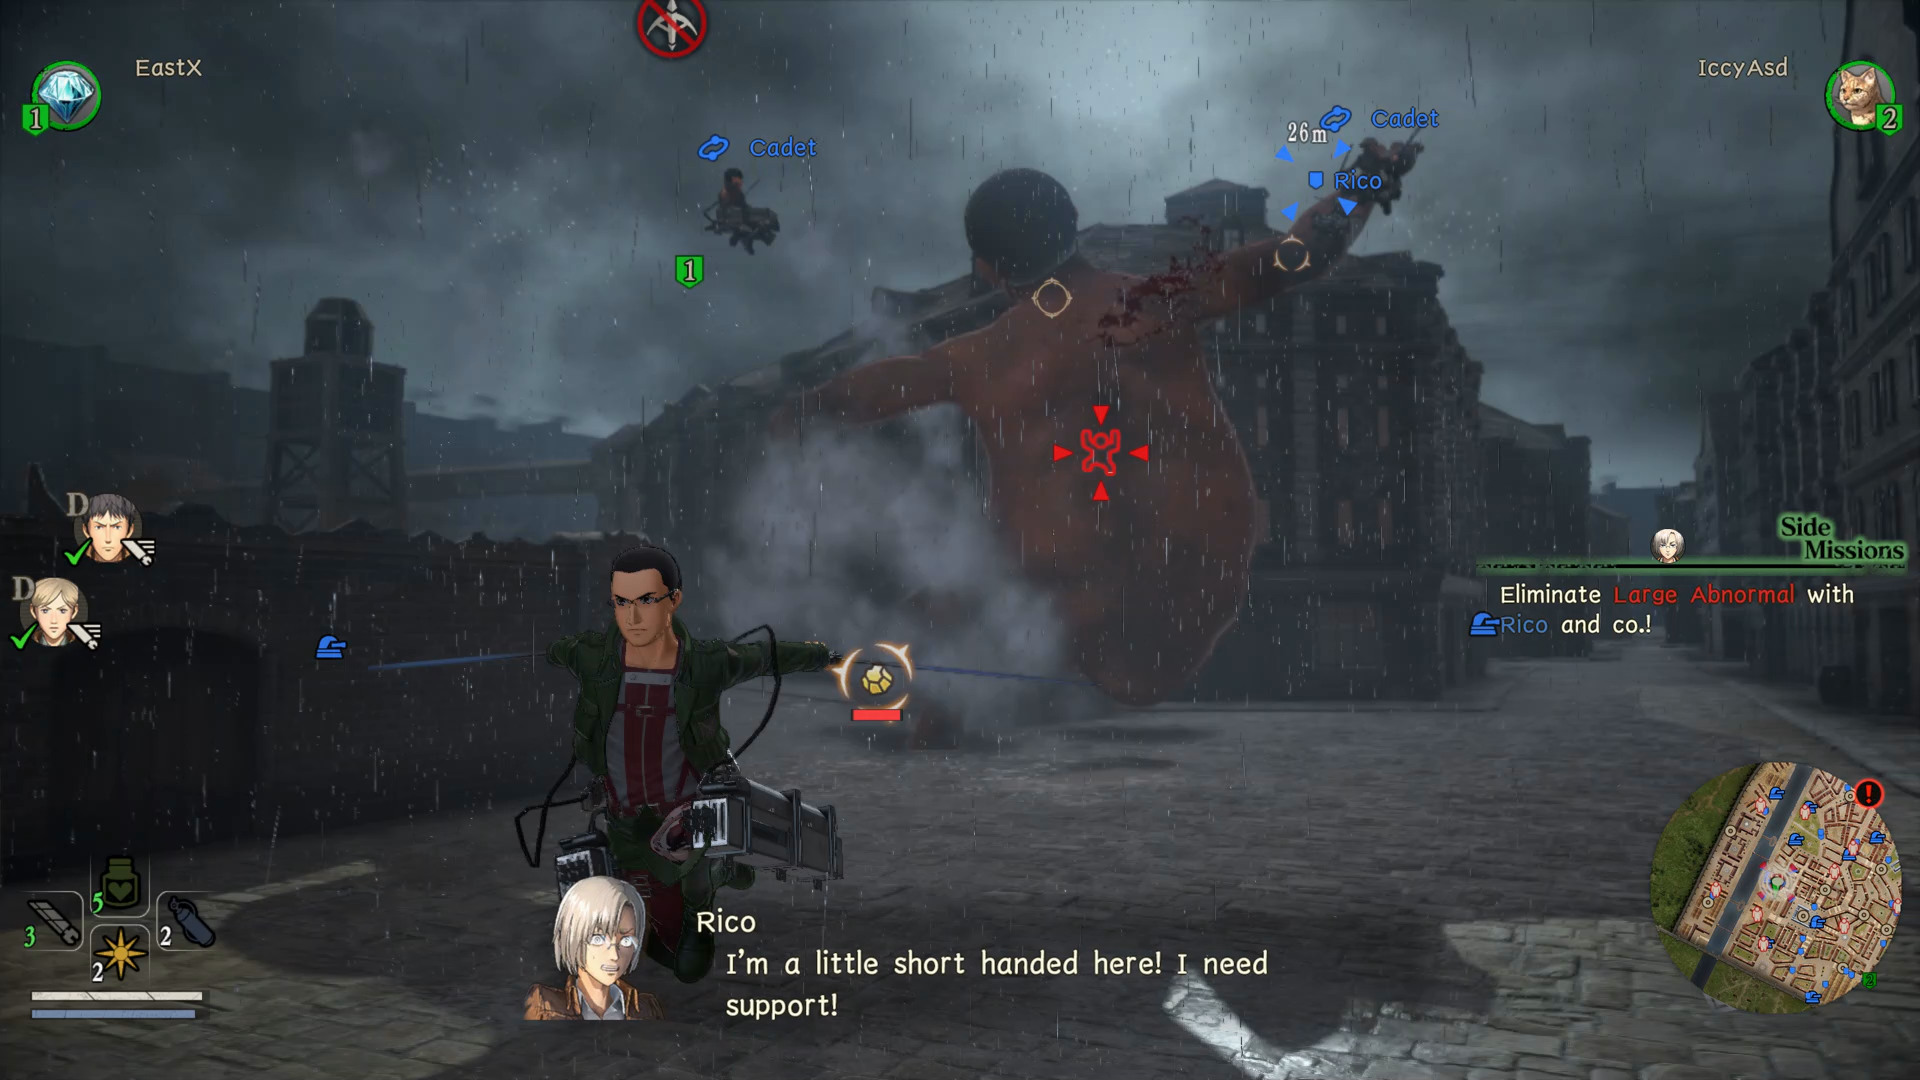 Attack on Titan 2: Final Battle [Online Game Code] 